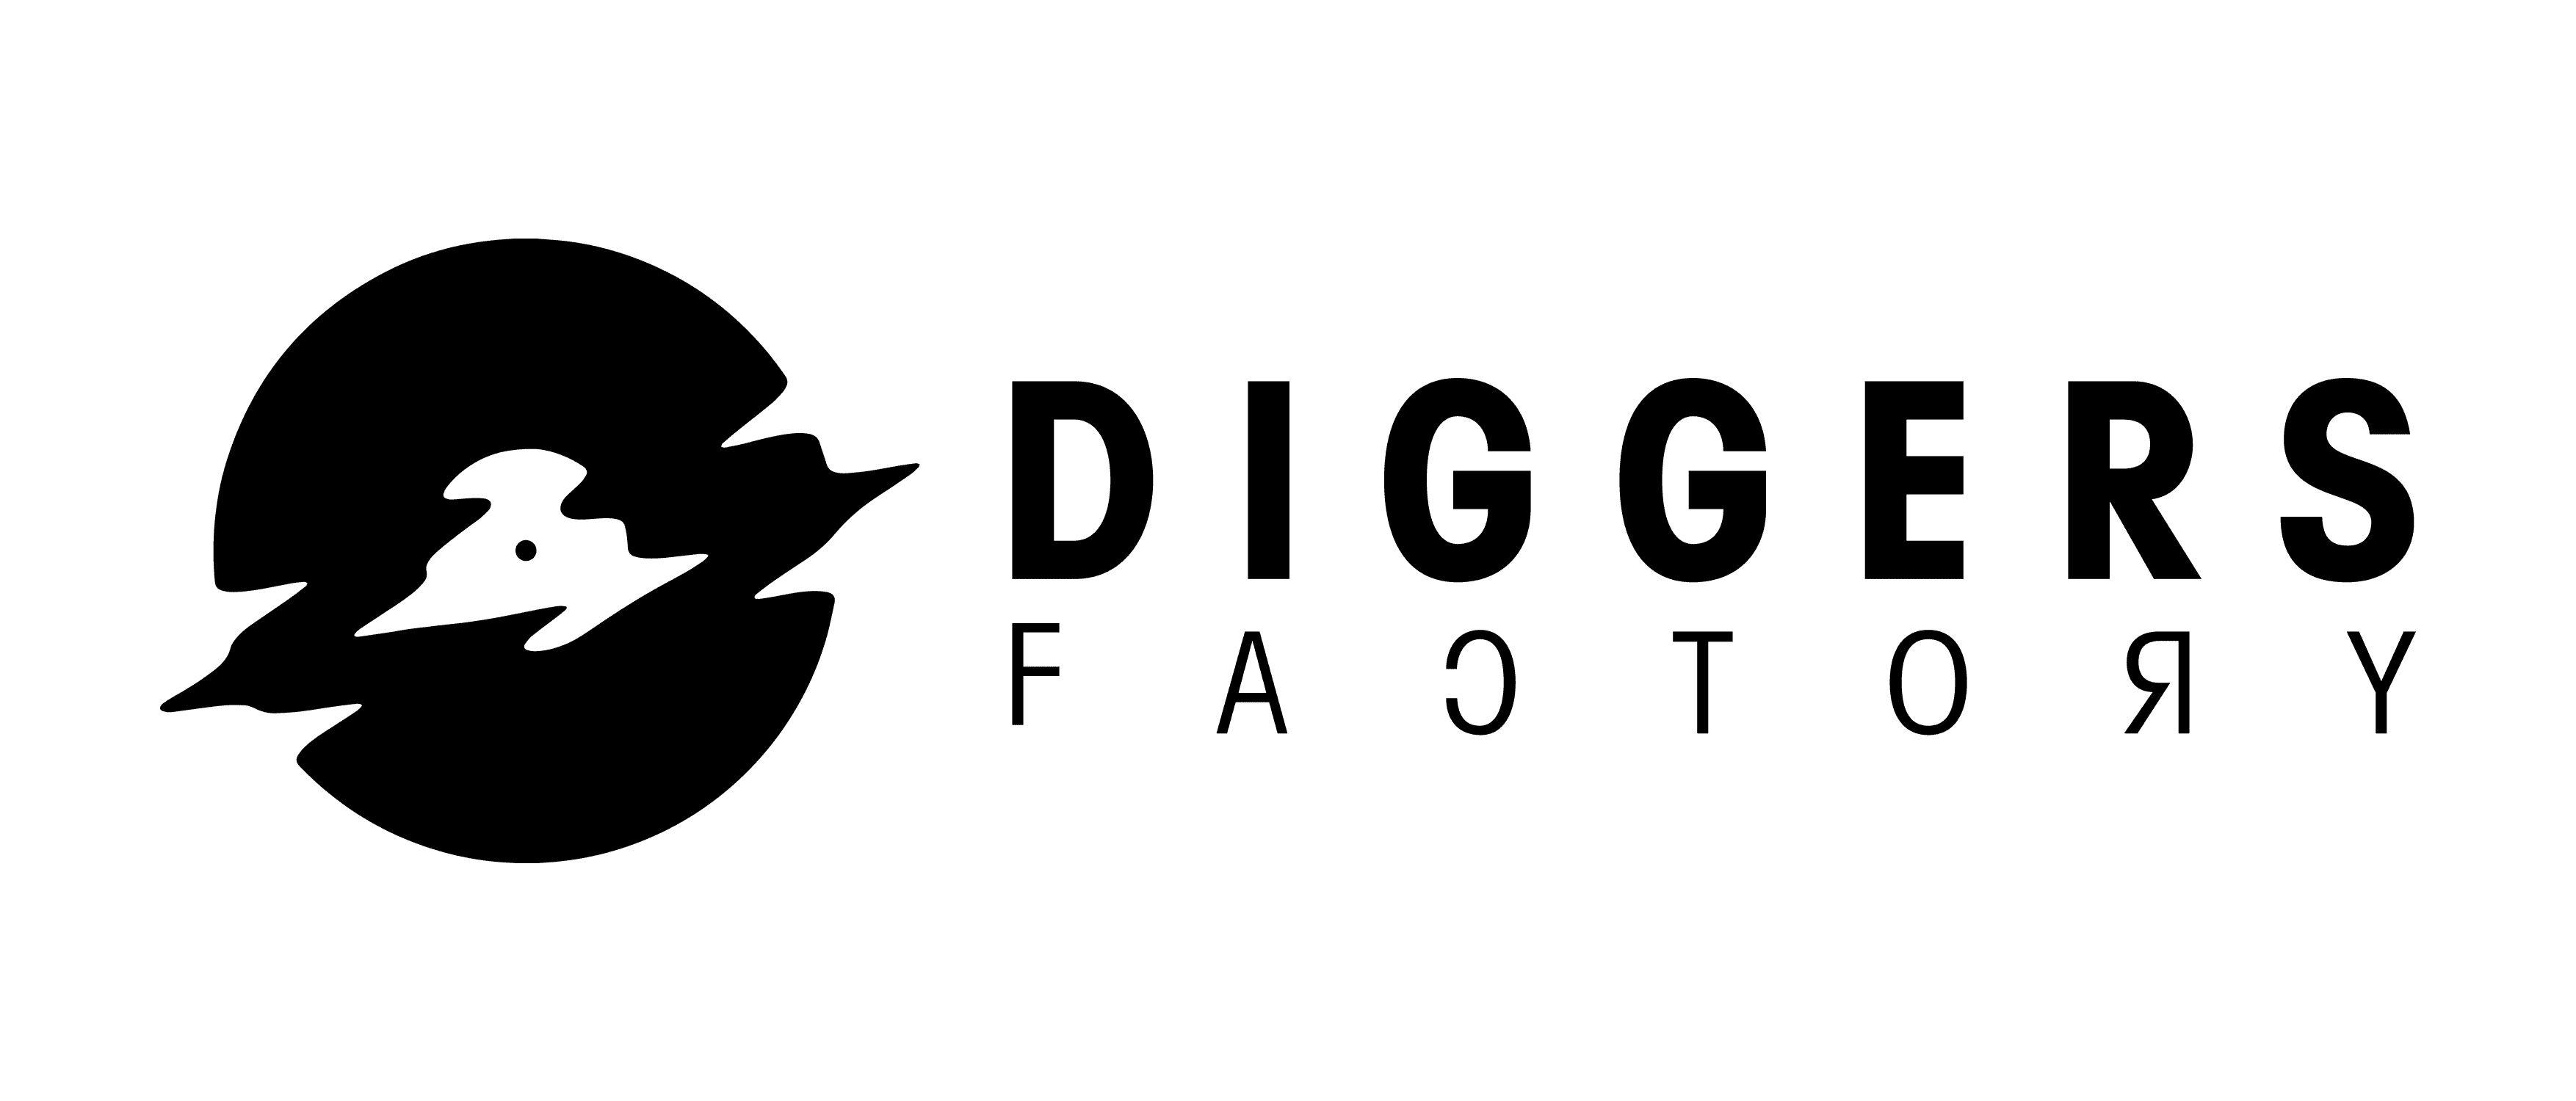 Digger's Factory